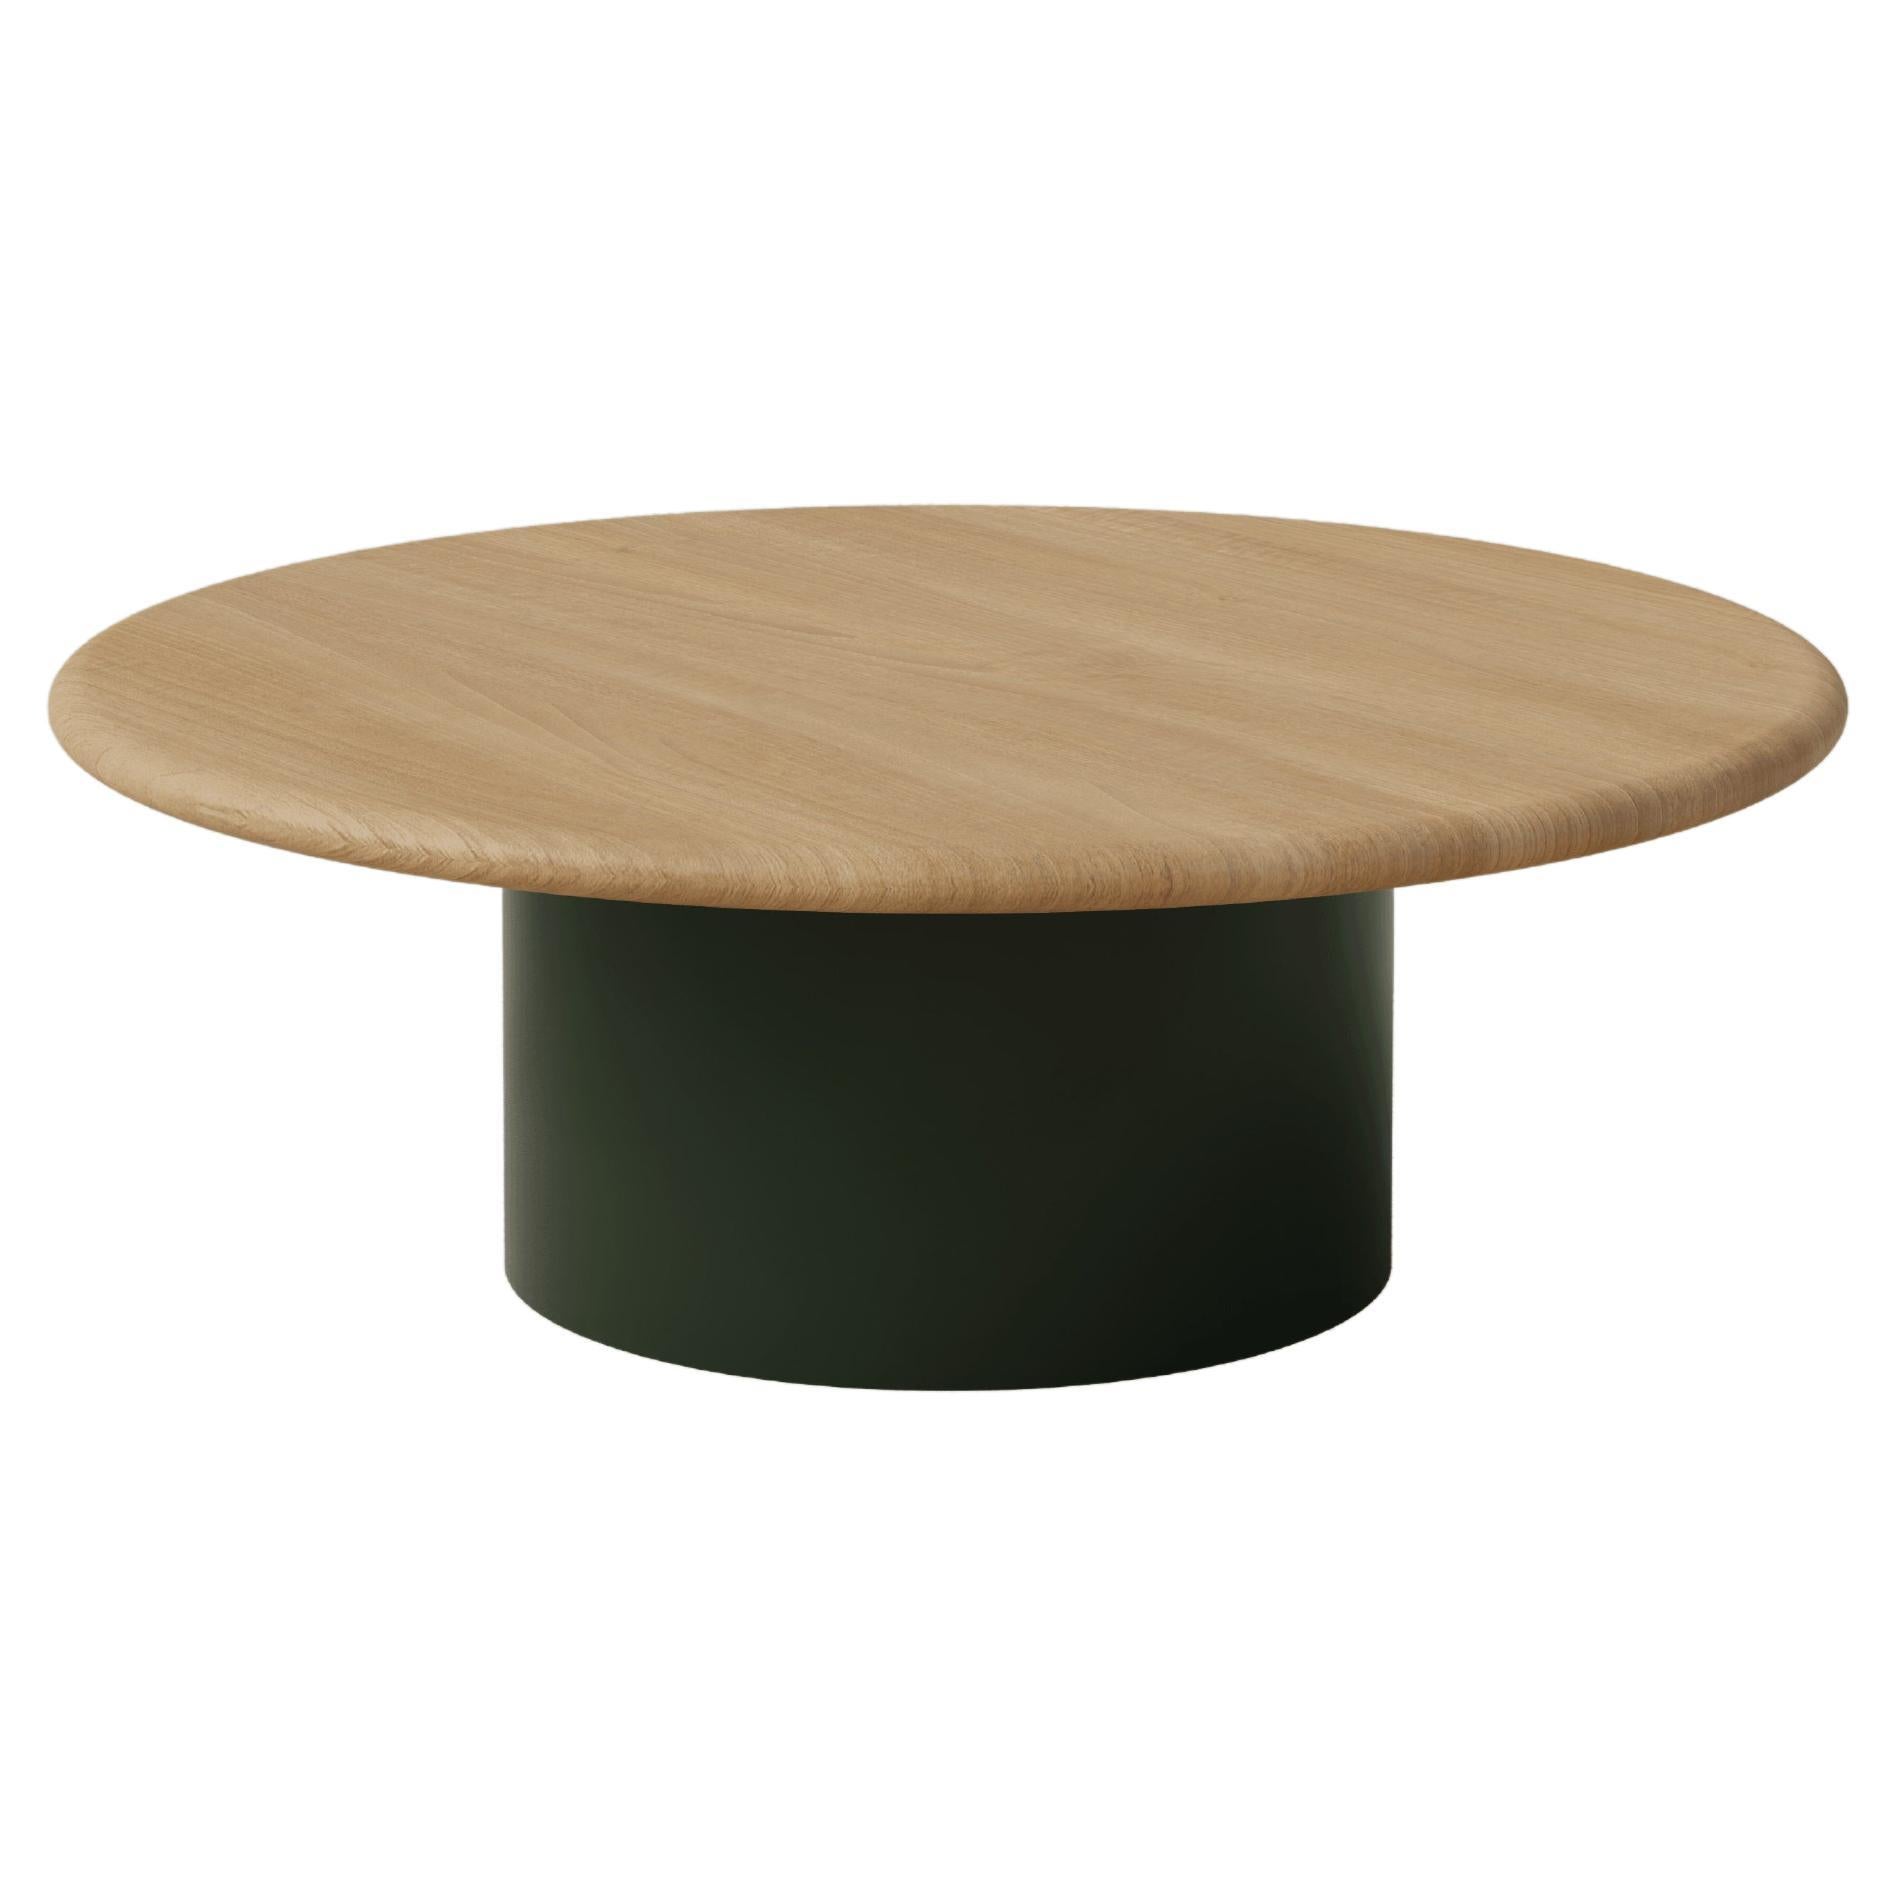 Raindrop Coffee Table, 800, Oak / Moss Green